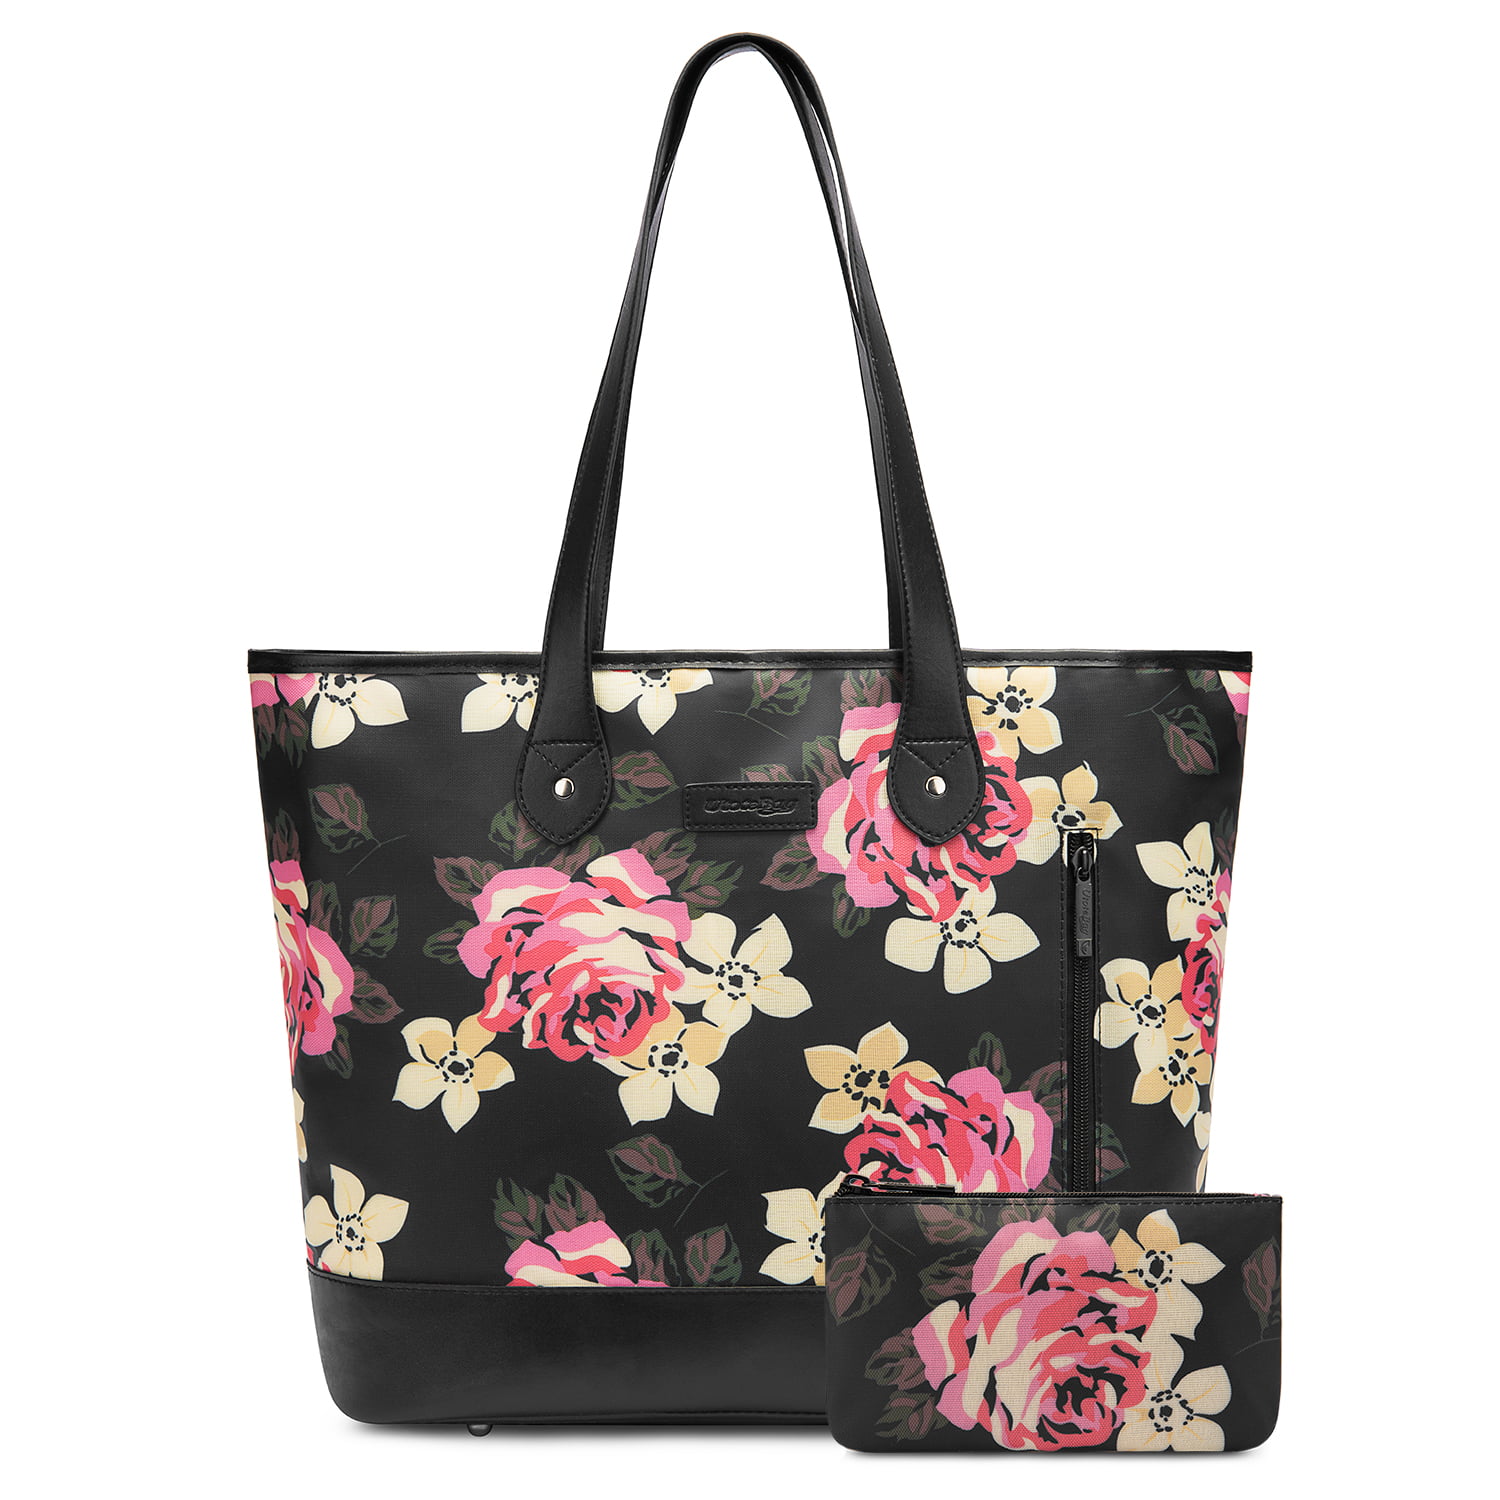 Pink Floral Casual Tote Bag Top Handles Shoulder Bag With Multiple Pocket For Woman